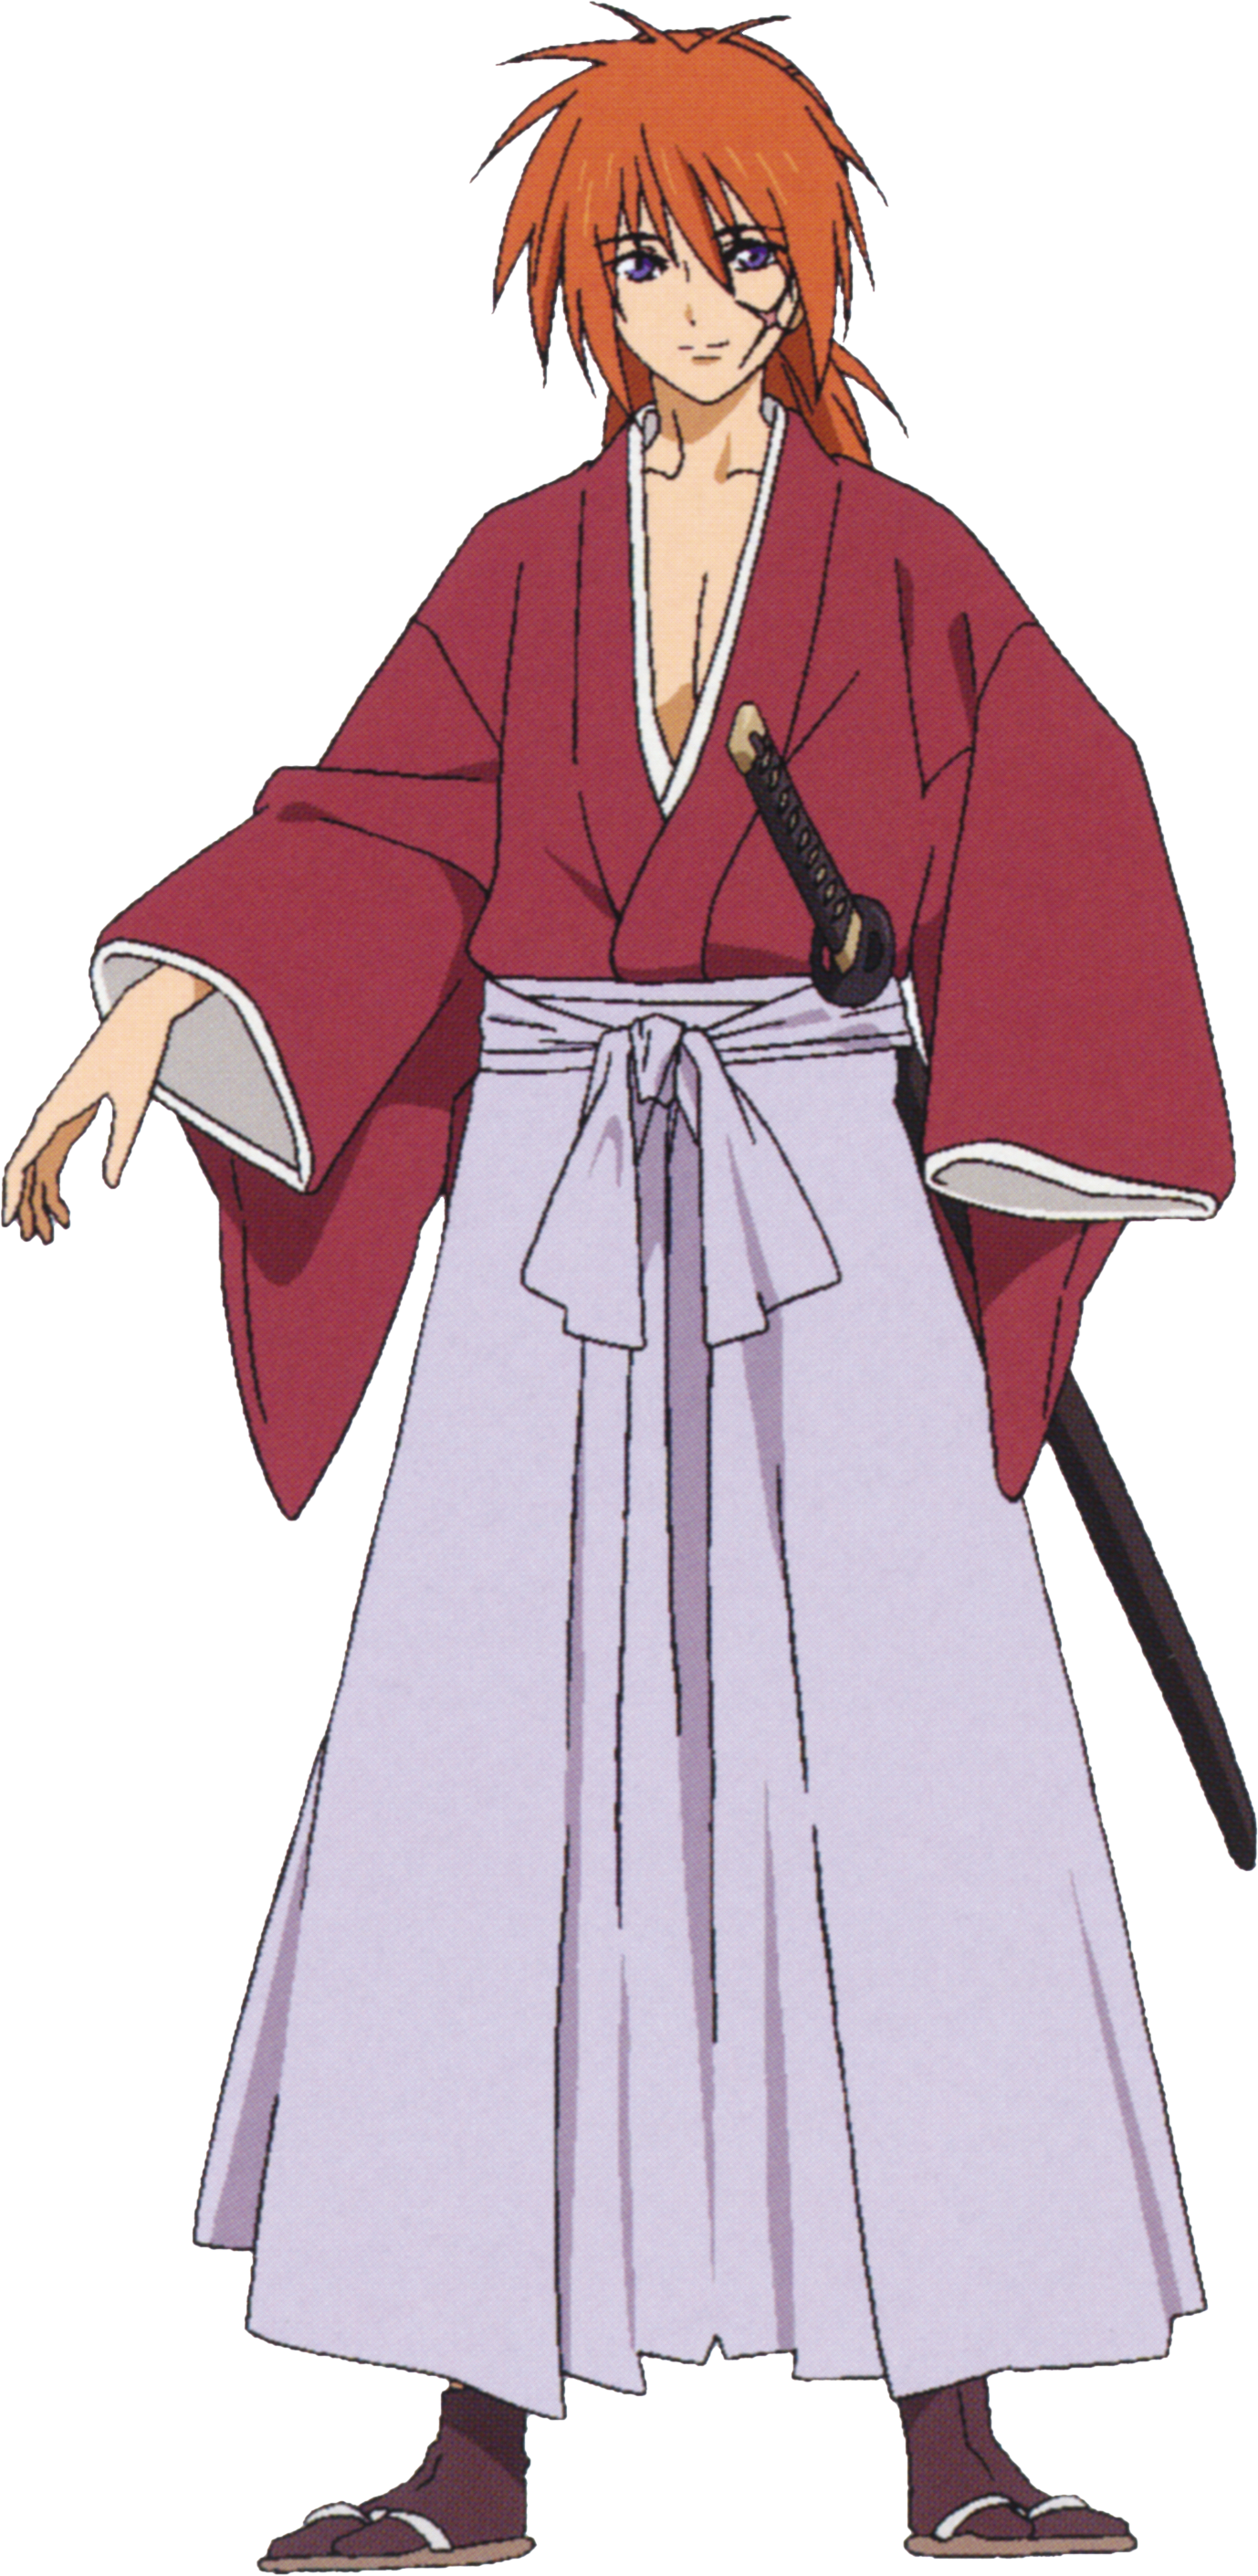 Rurouni Kenshin Manga Anime Katana Sword With Scabbard - Hero Outdoors